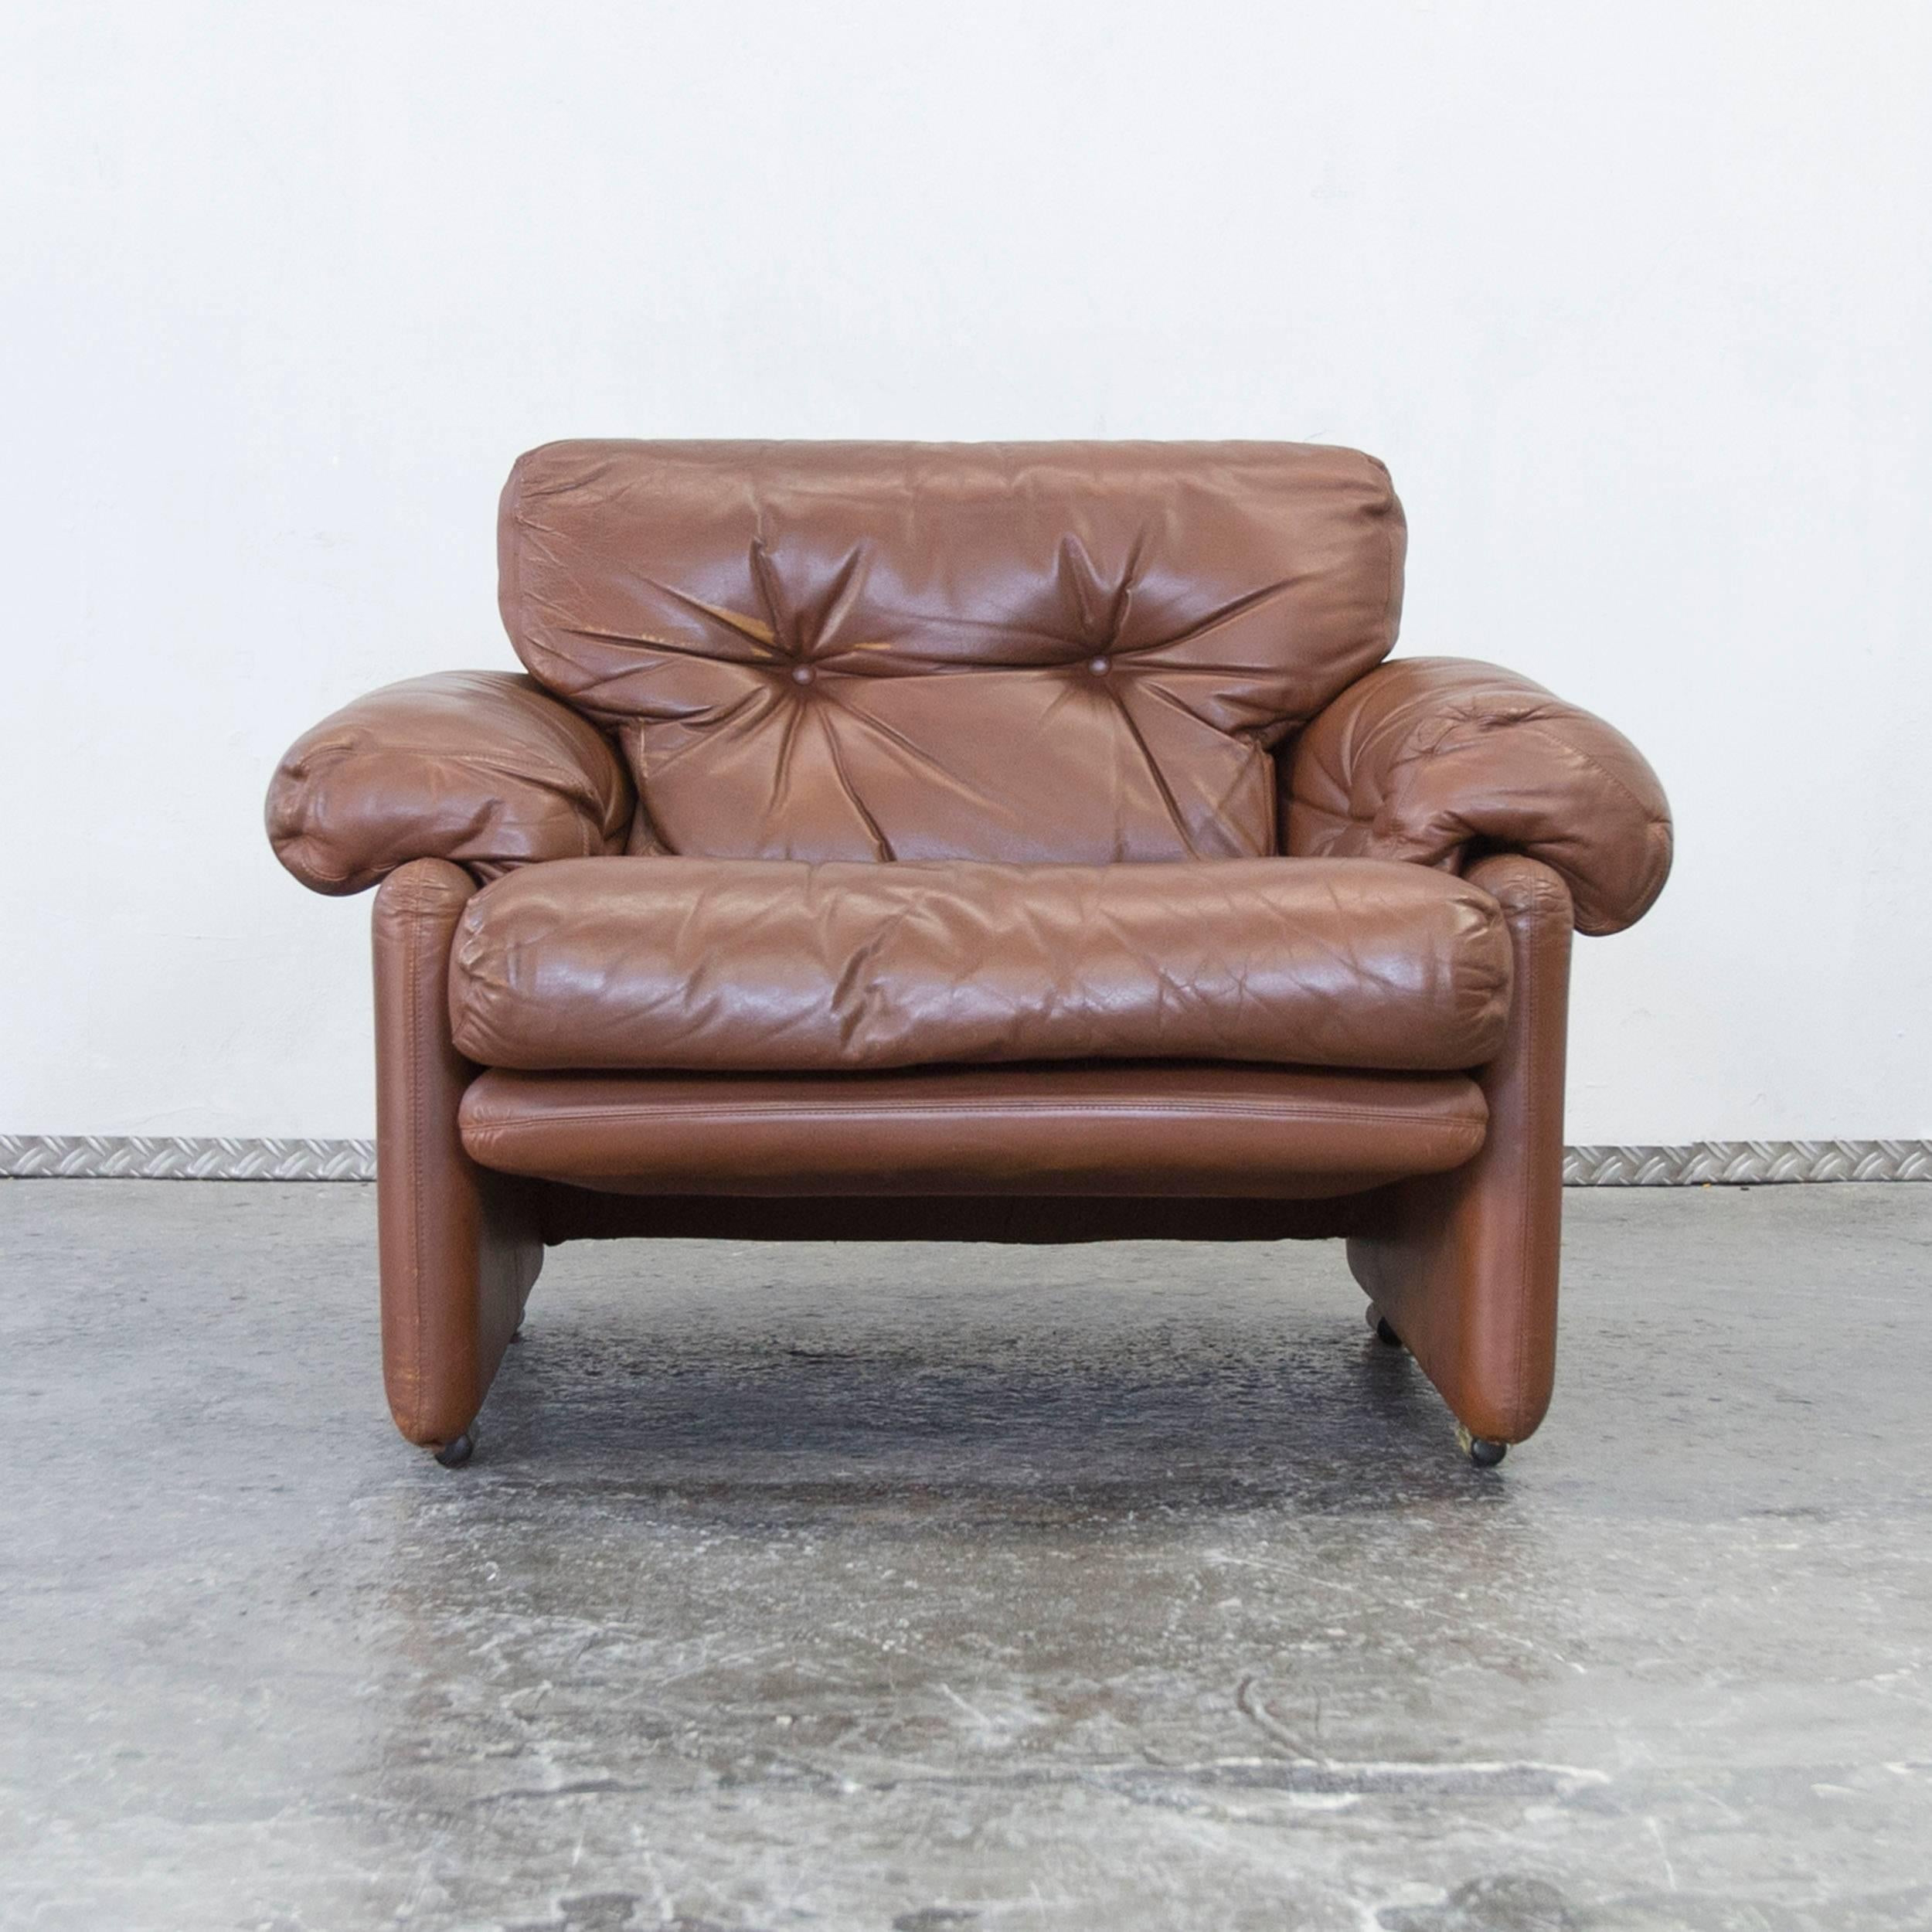 C&B Italia Coronado fine leather armchair by Tobia Scarpa couch brown manufactured before the rename to B&B Italia, circa 1966-1972.